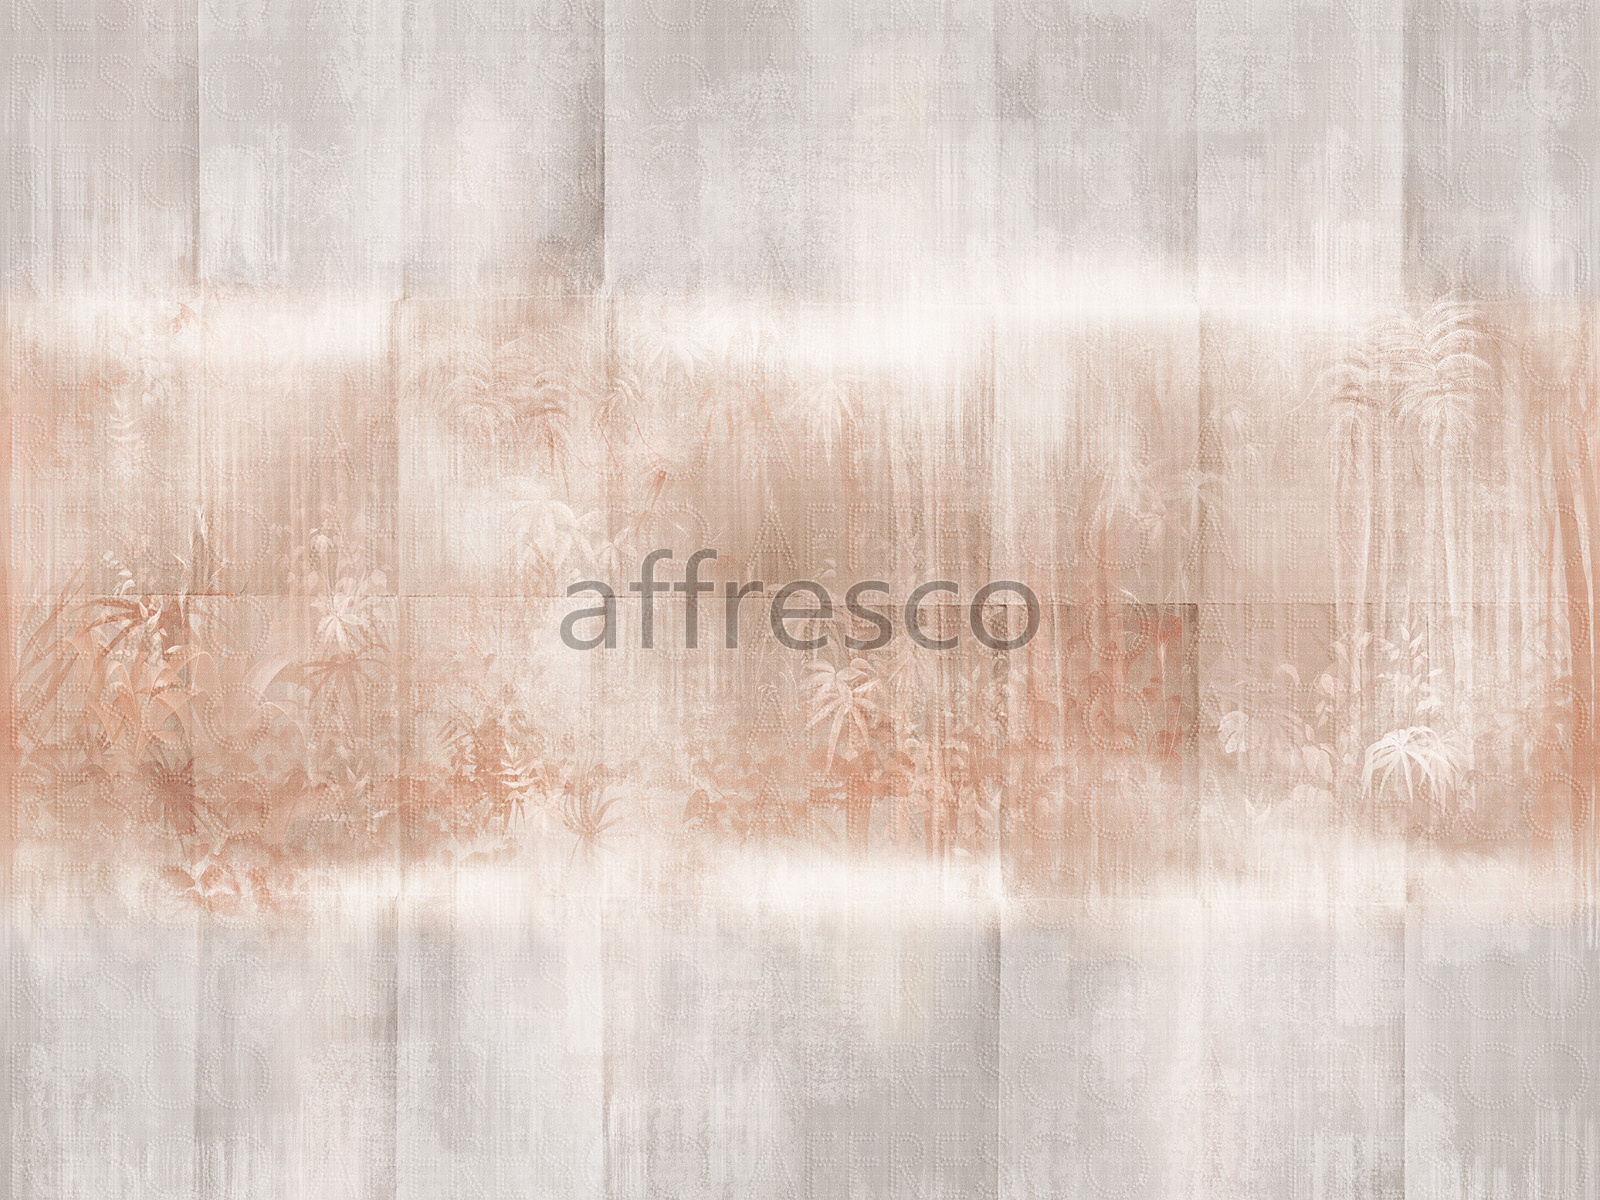 ID454-COL3 | Trend Art | Affresco Factory